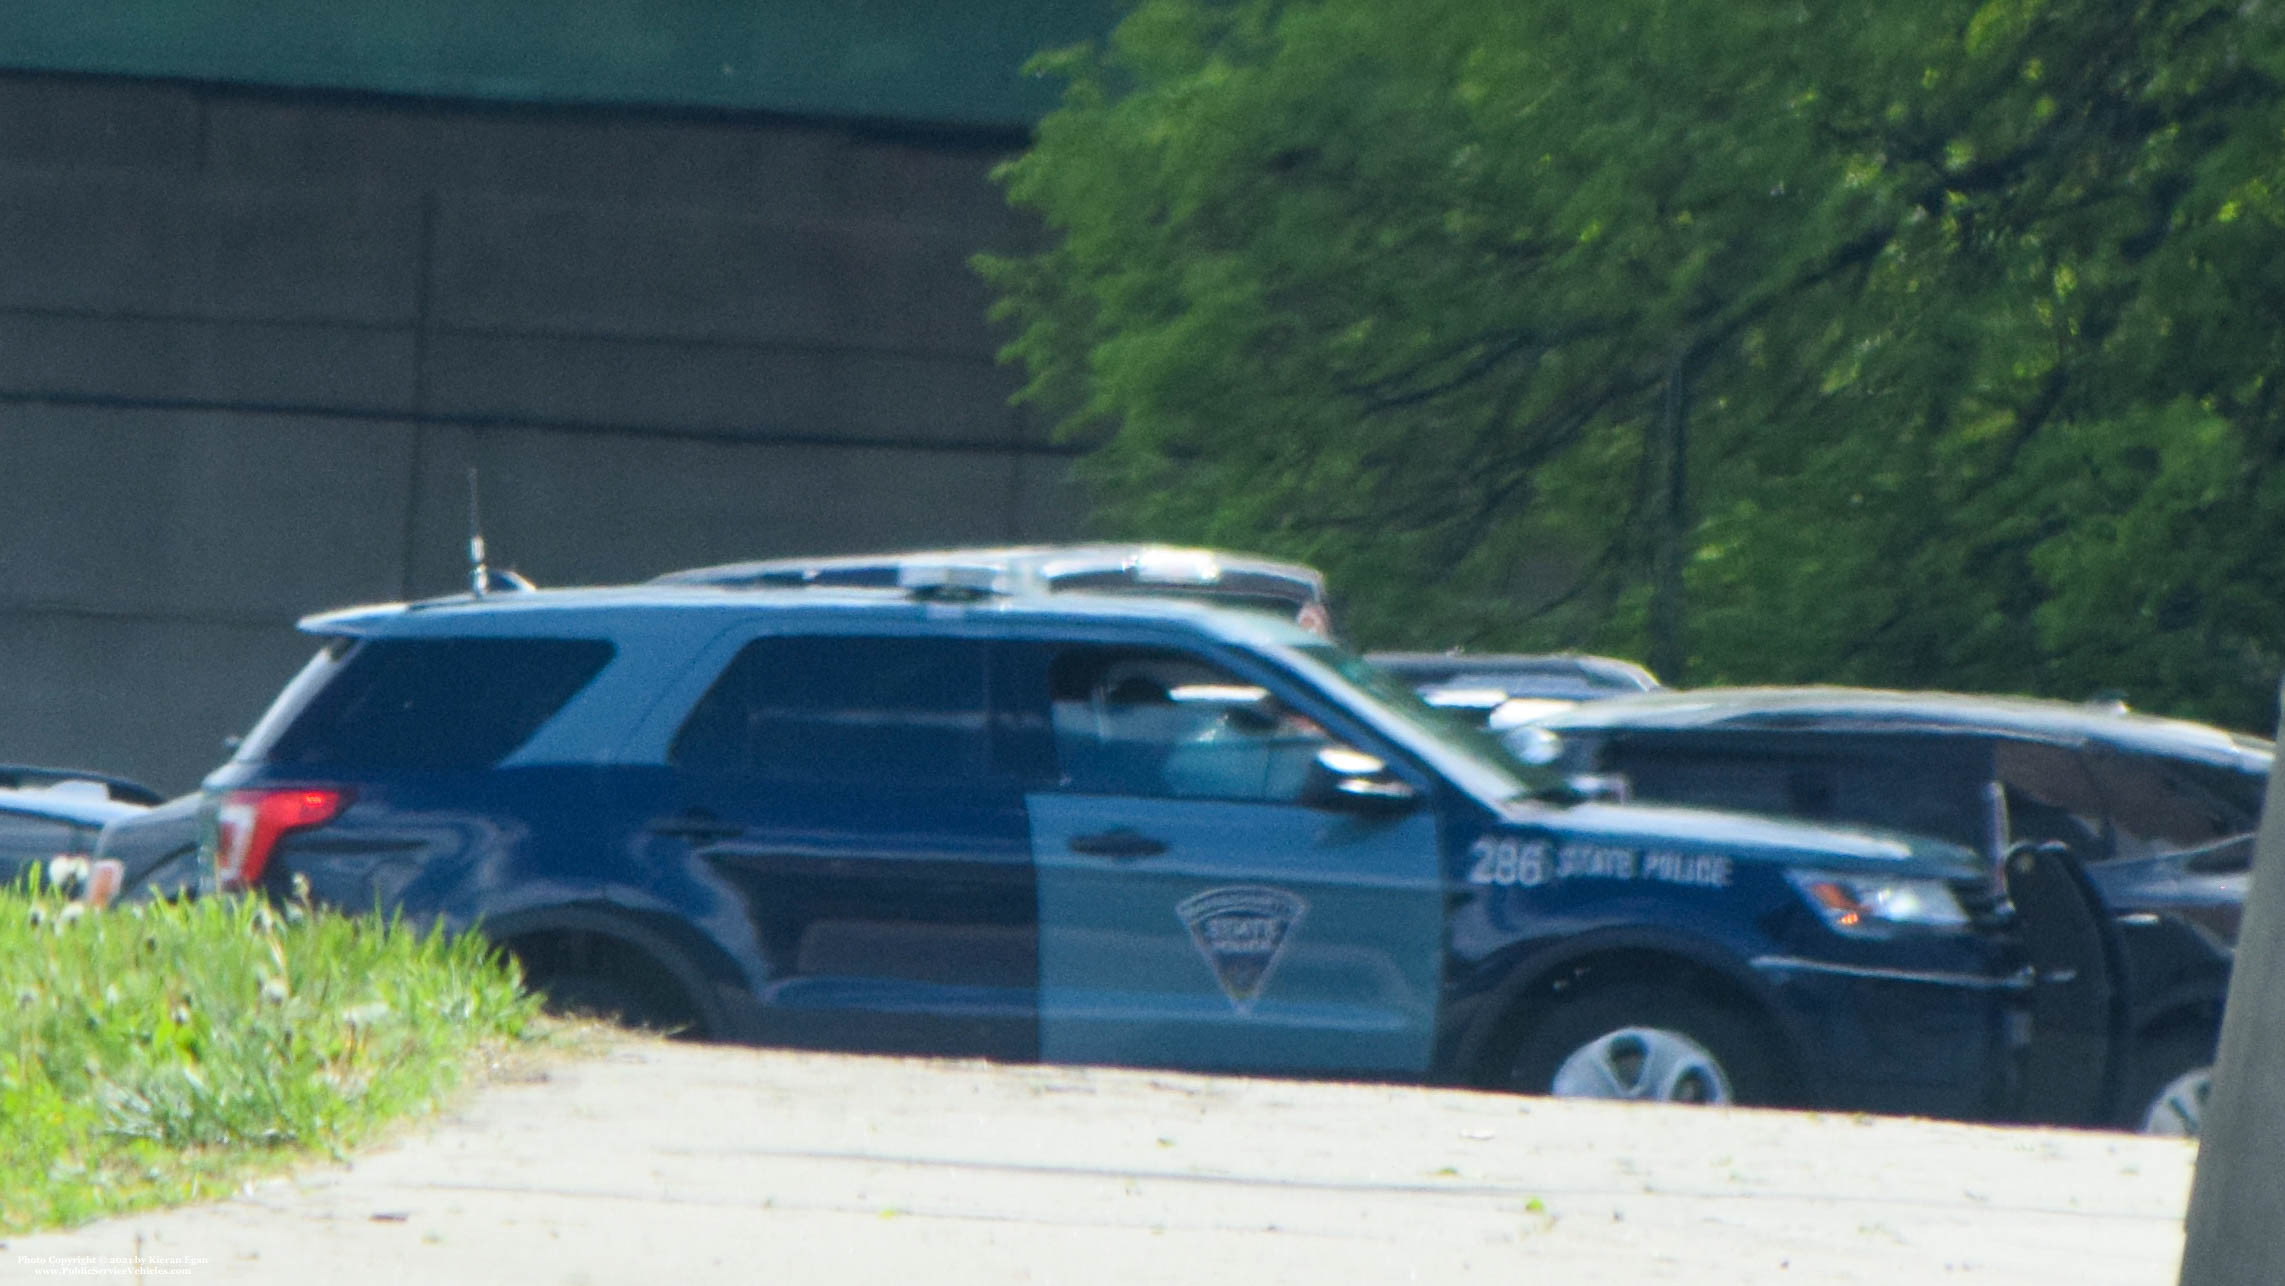 A photo  of Massachusetts State Police
            Cruiser 286, a 2019 Ford Police Interceptor Utility             taken by Kieran Egan